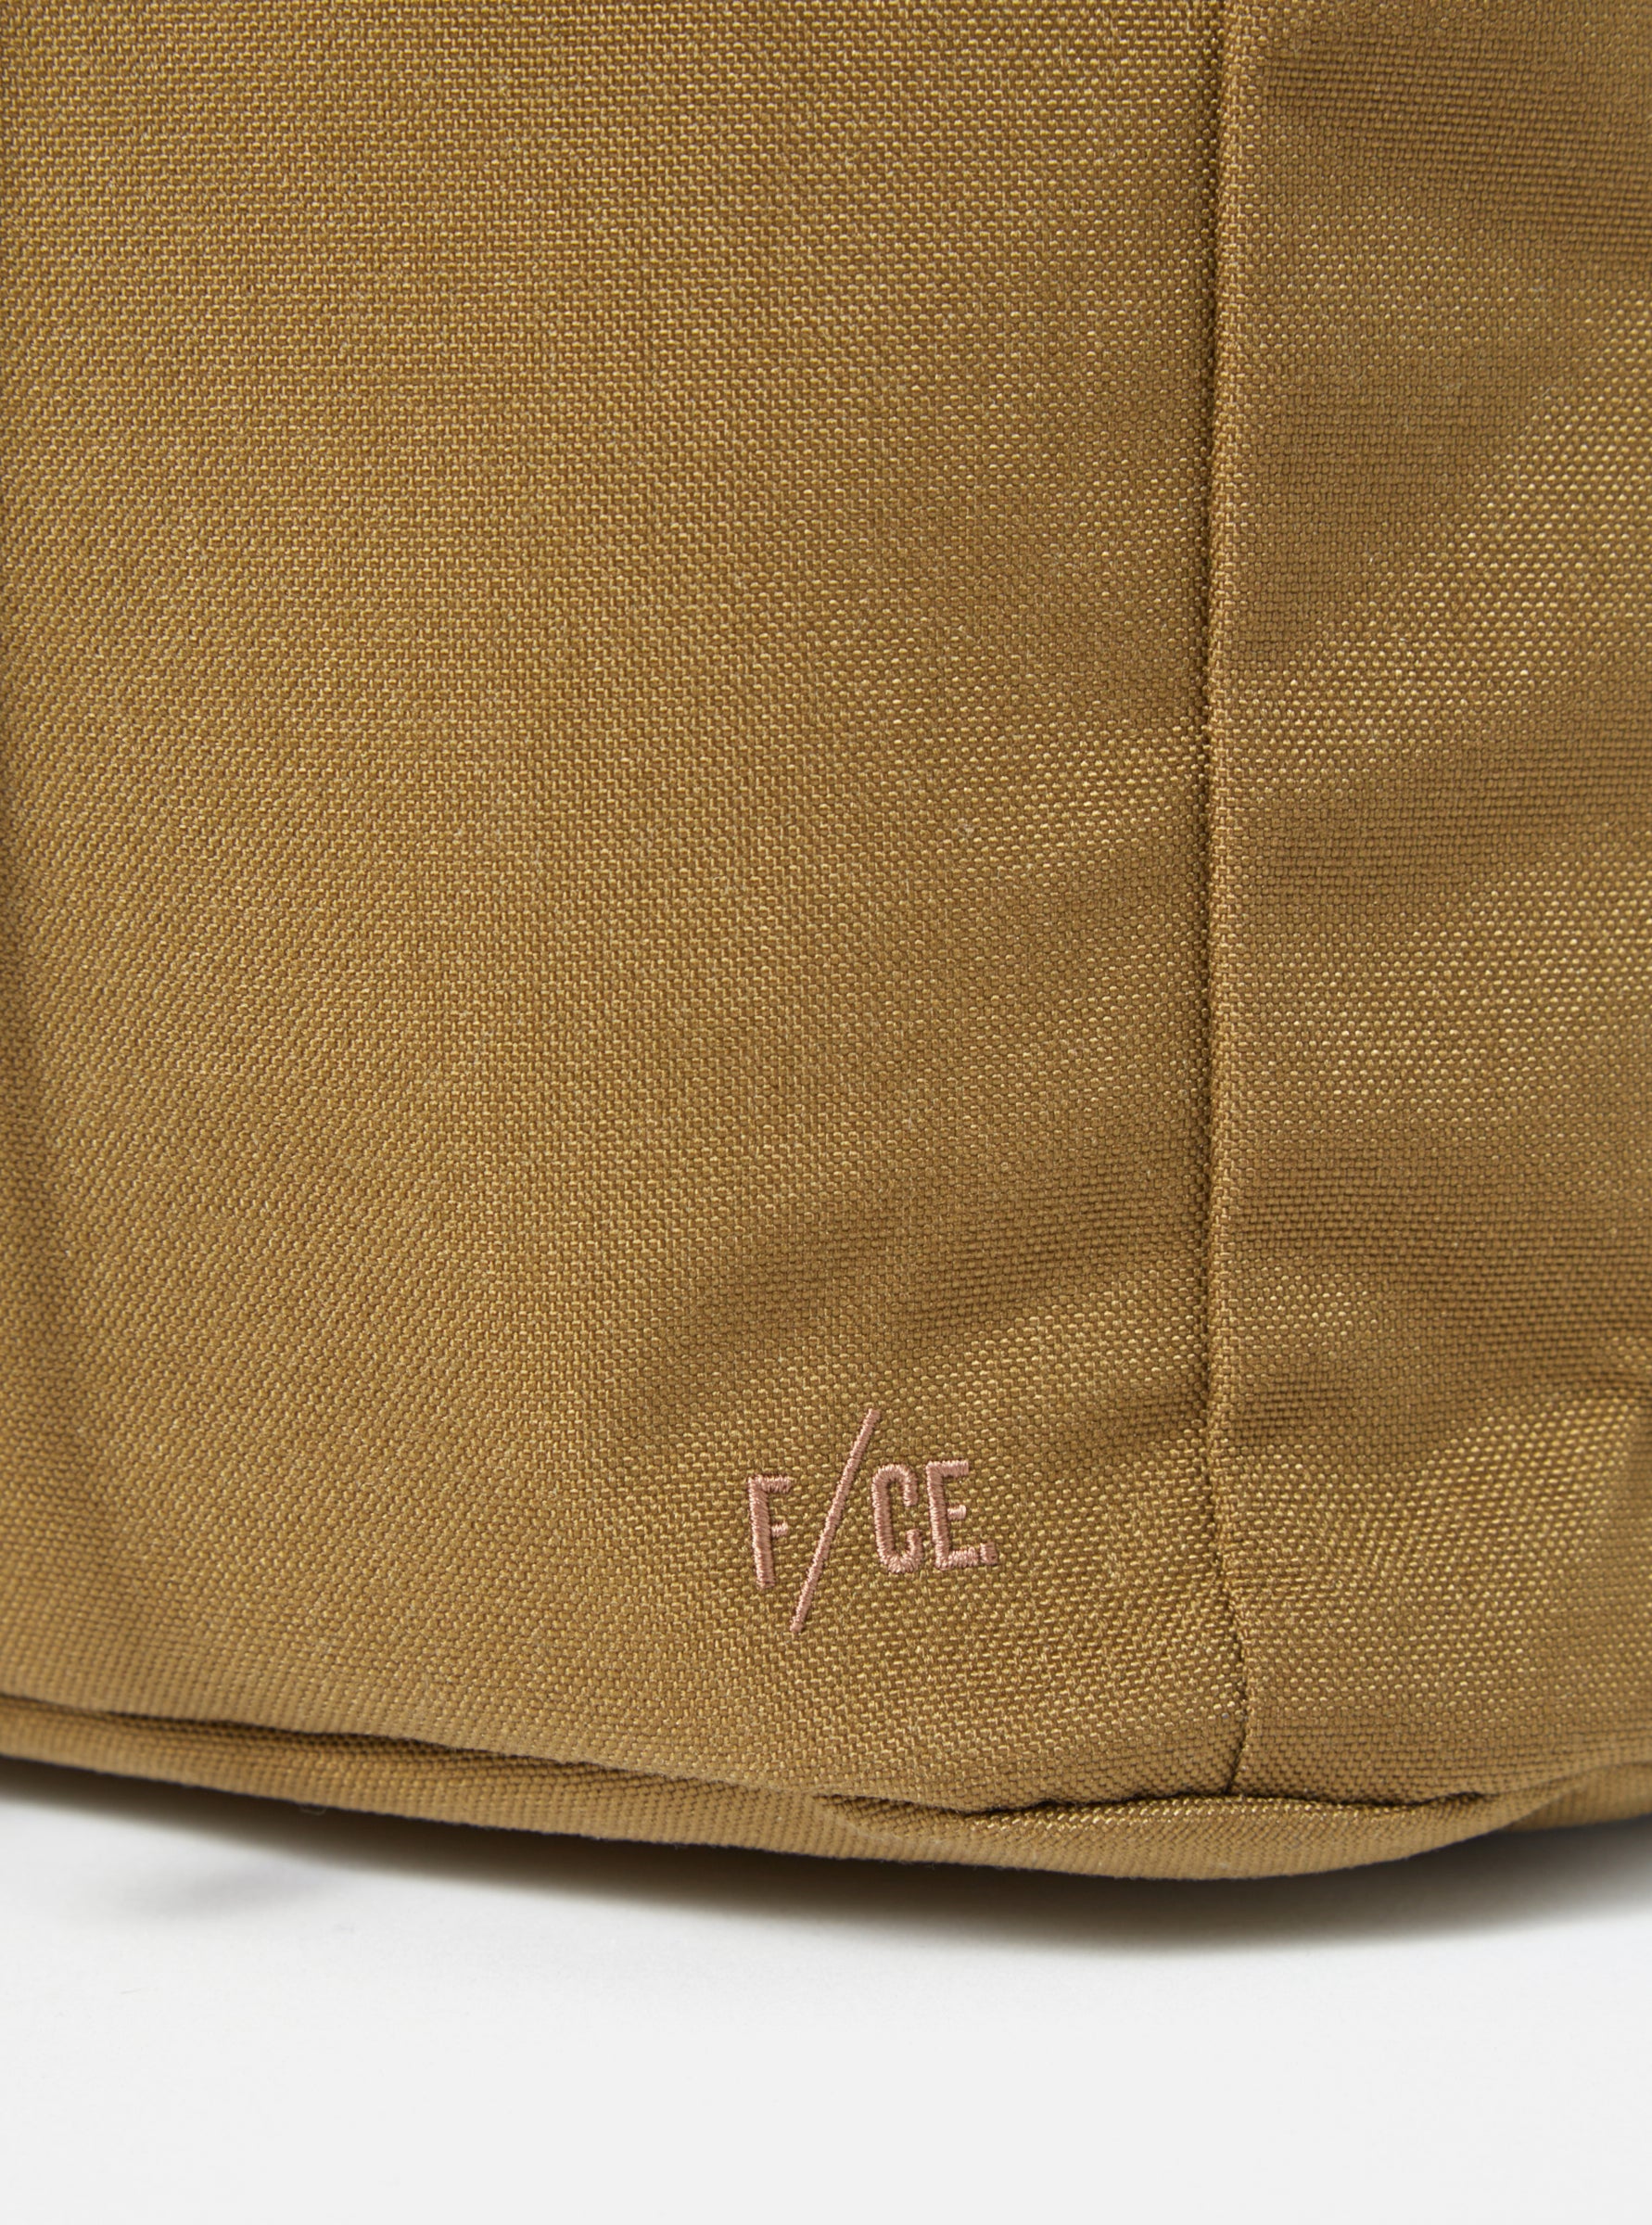 F/CE.® Drawstring Bag in Coyote Cordura